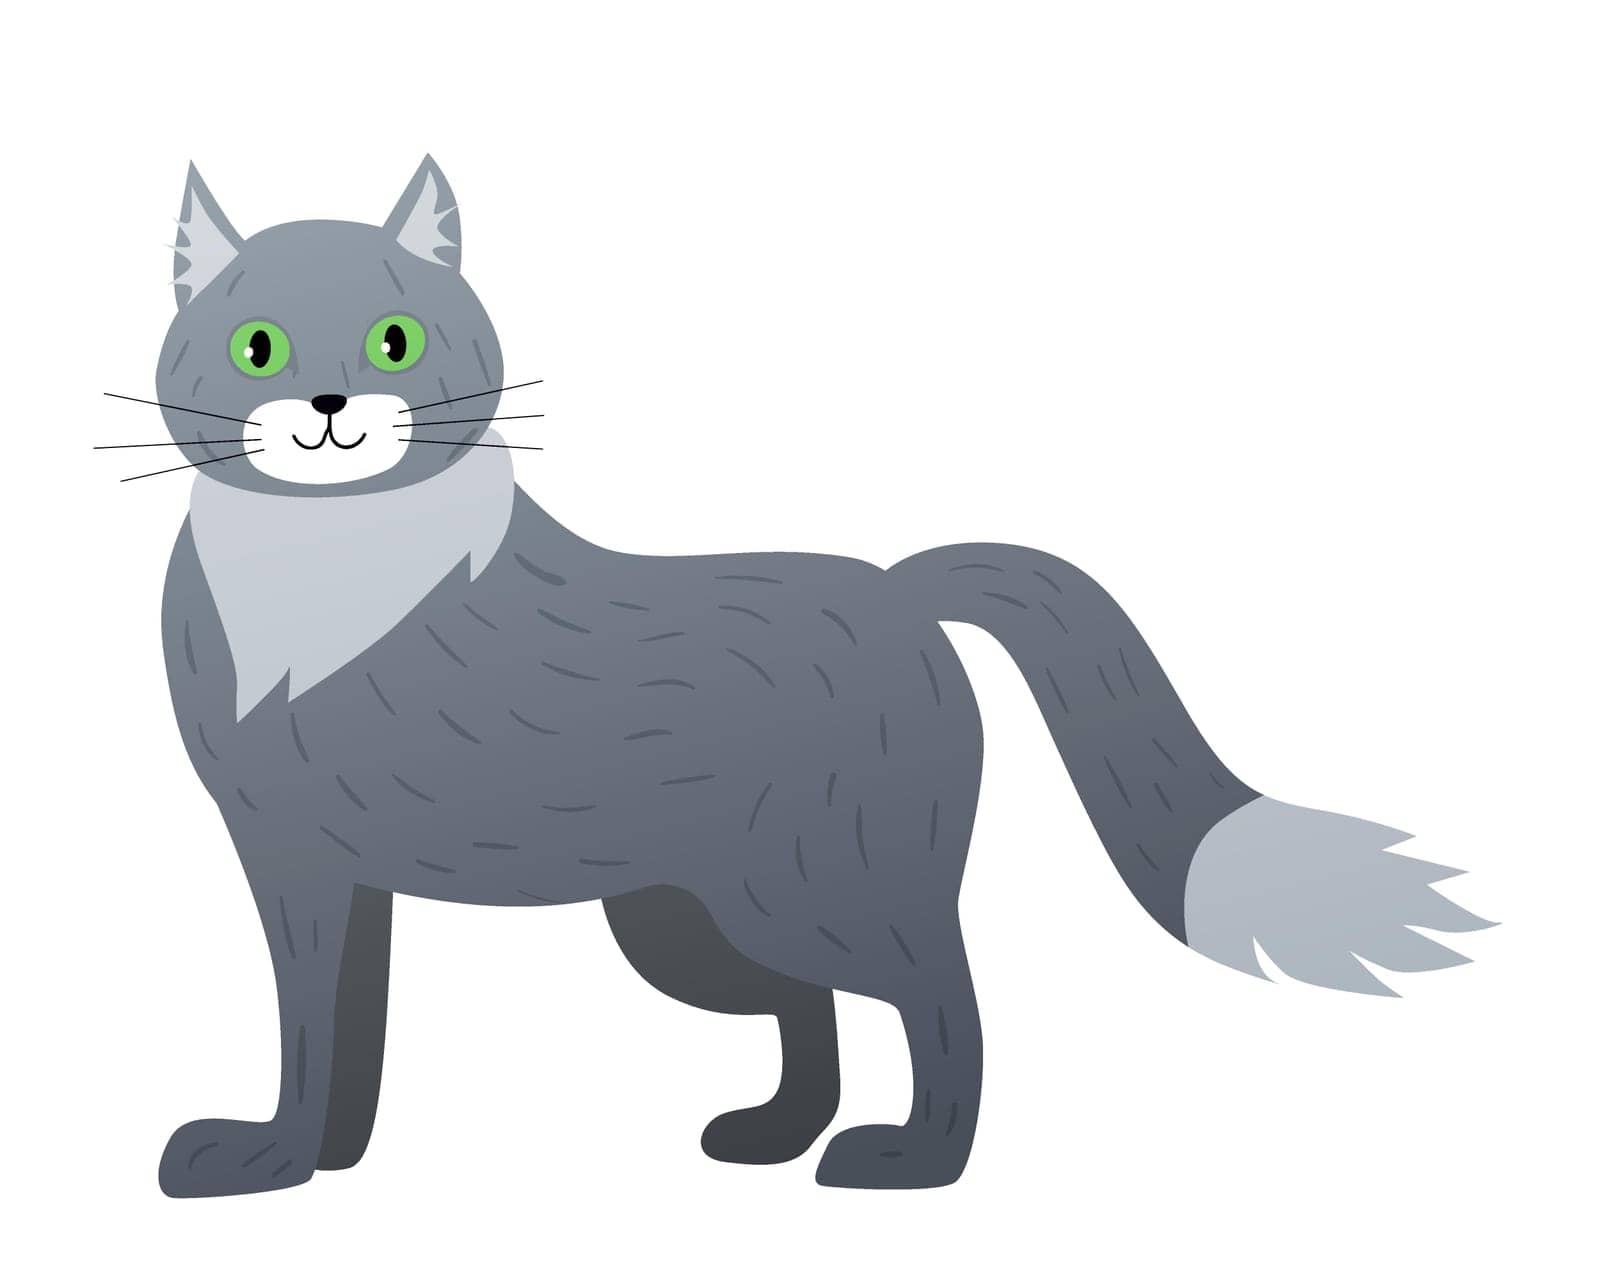 Adorable domestic cat. Fluffy feline pet, house friendly animal vector cartoon illustration